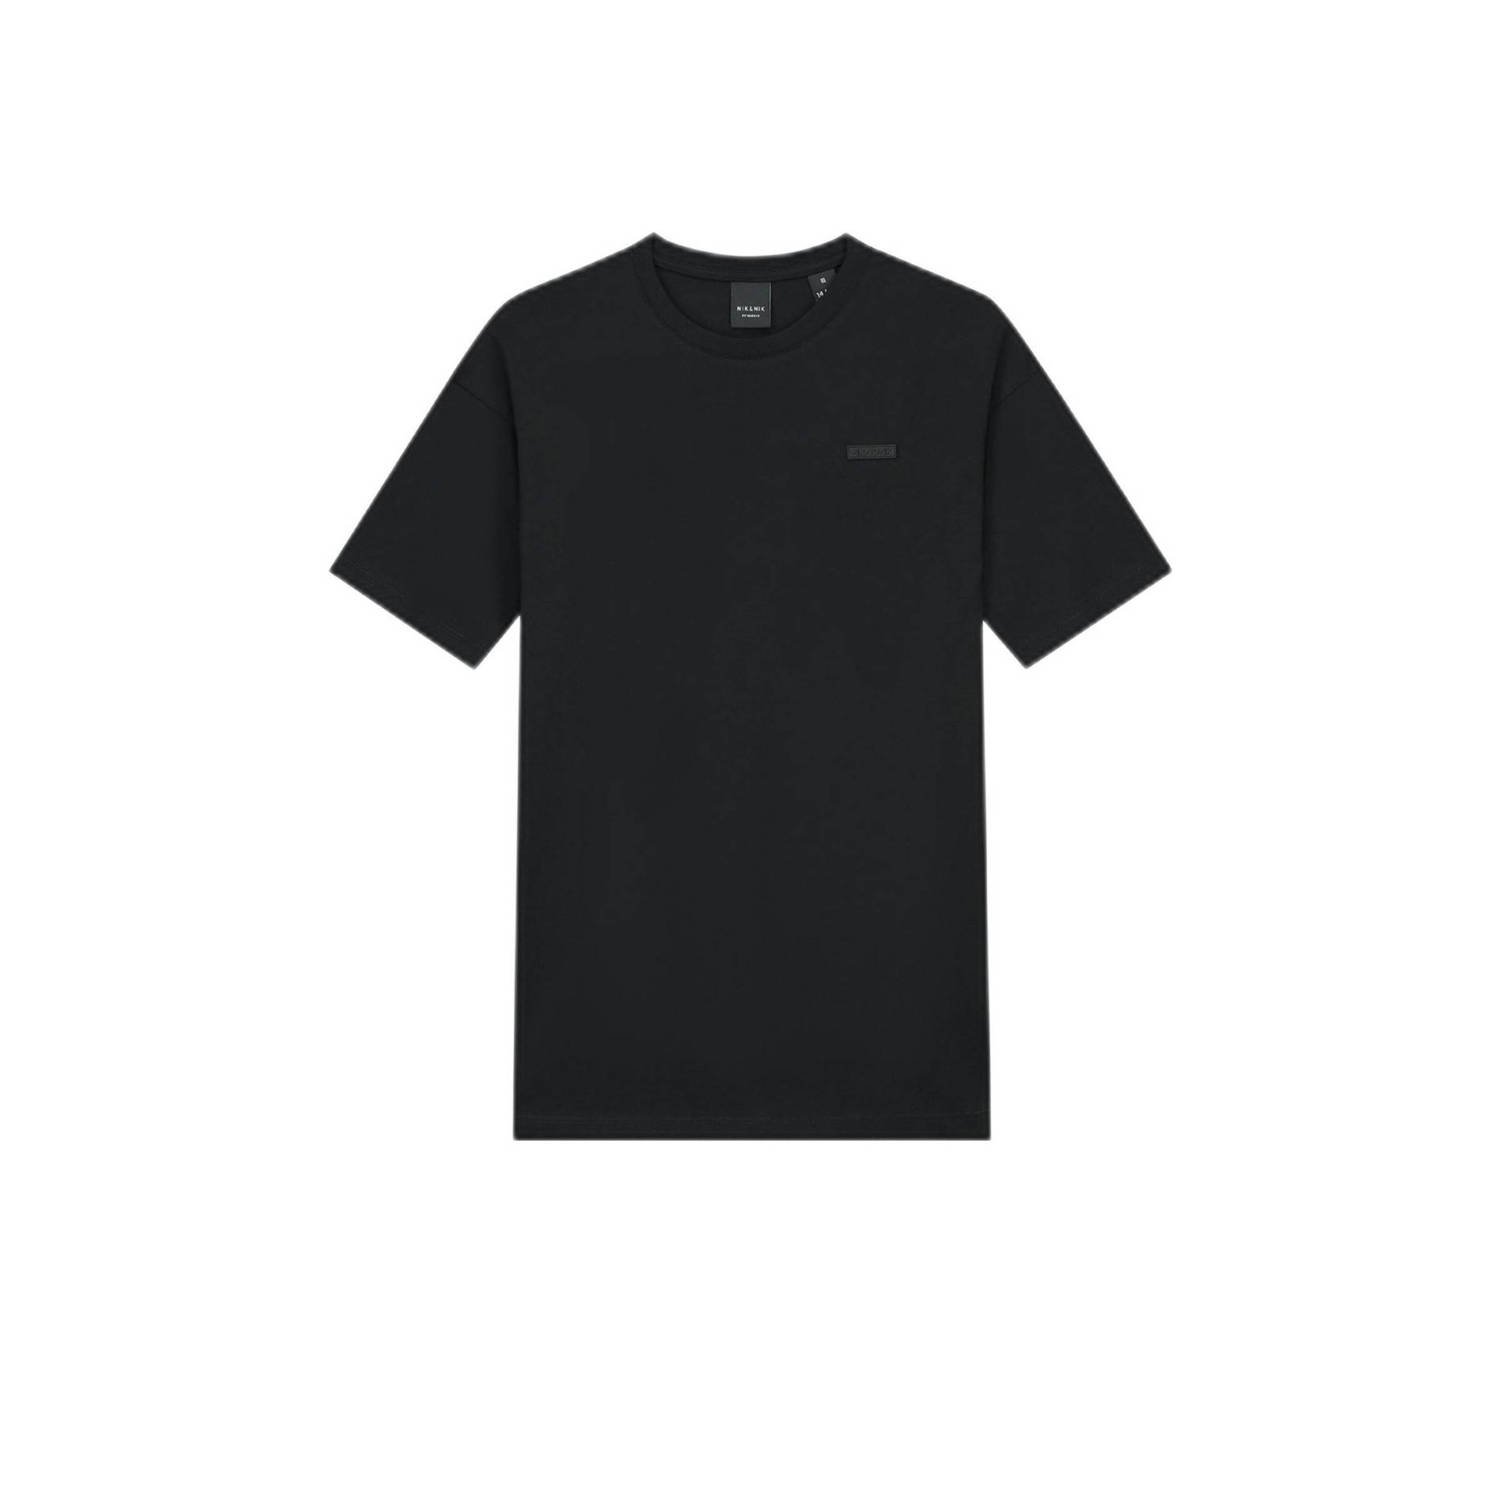 NIK&NIK T-shirt Palm met backprint zwart